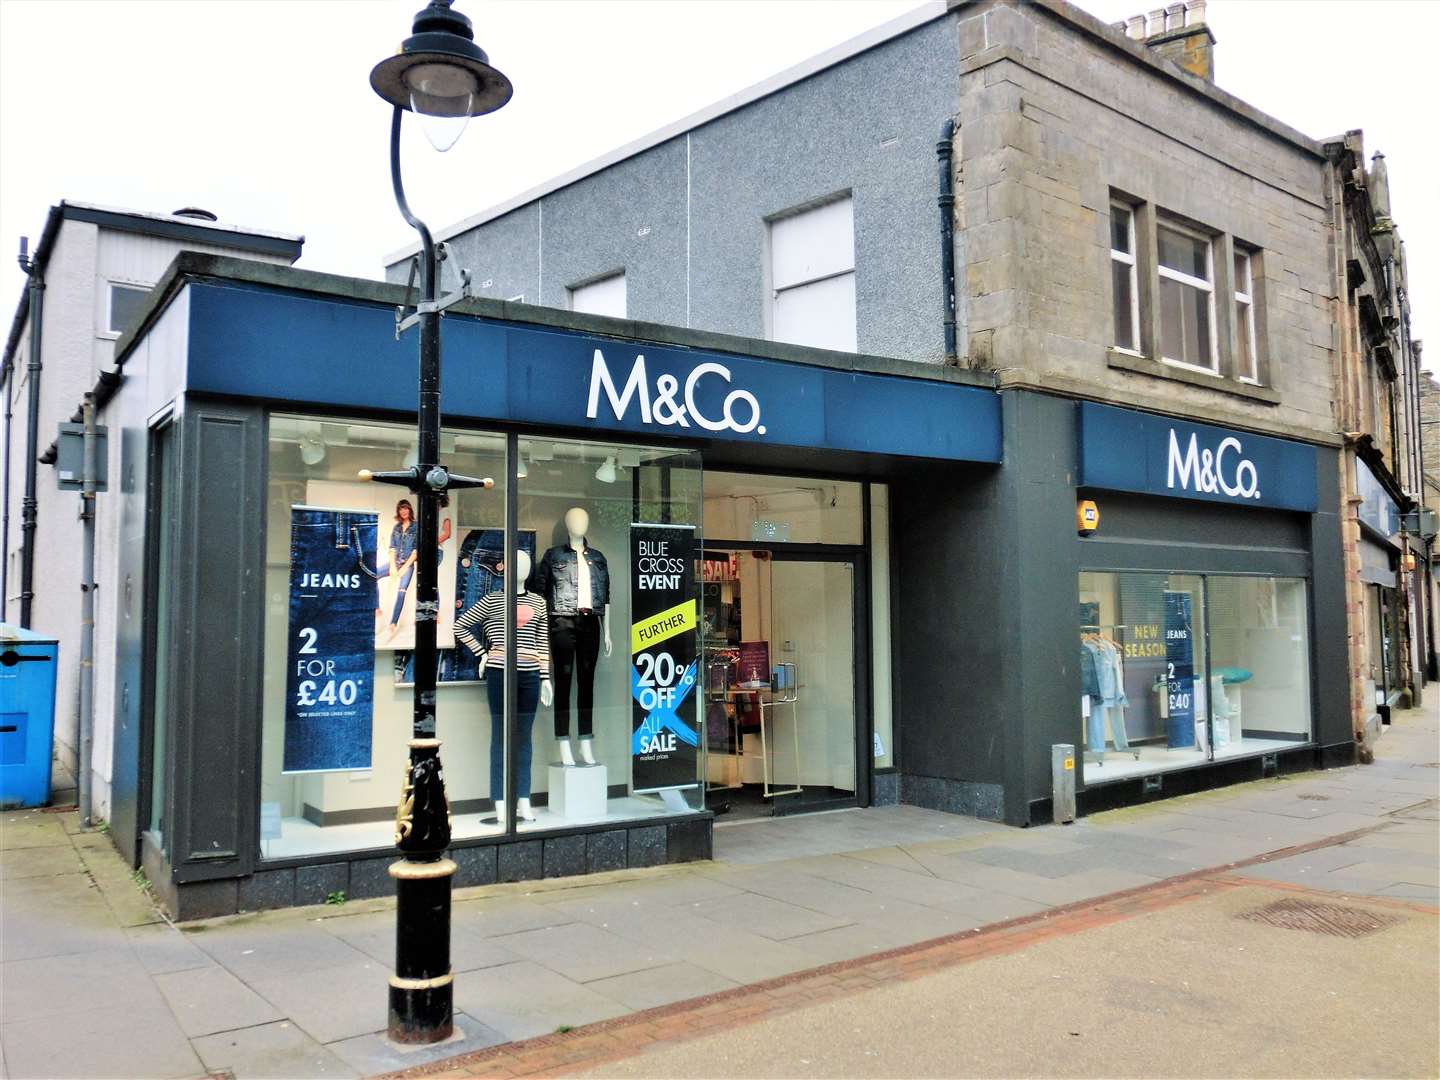 The M&Co shop in Thurso. Picture: DGS